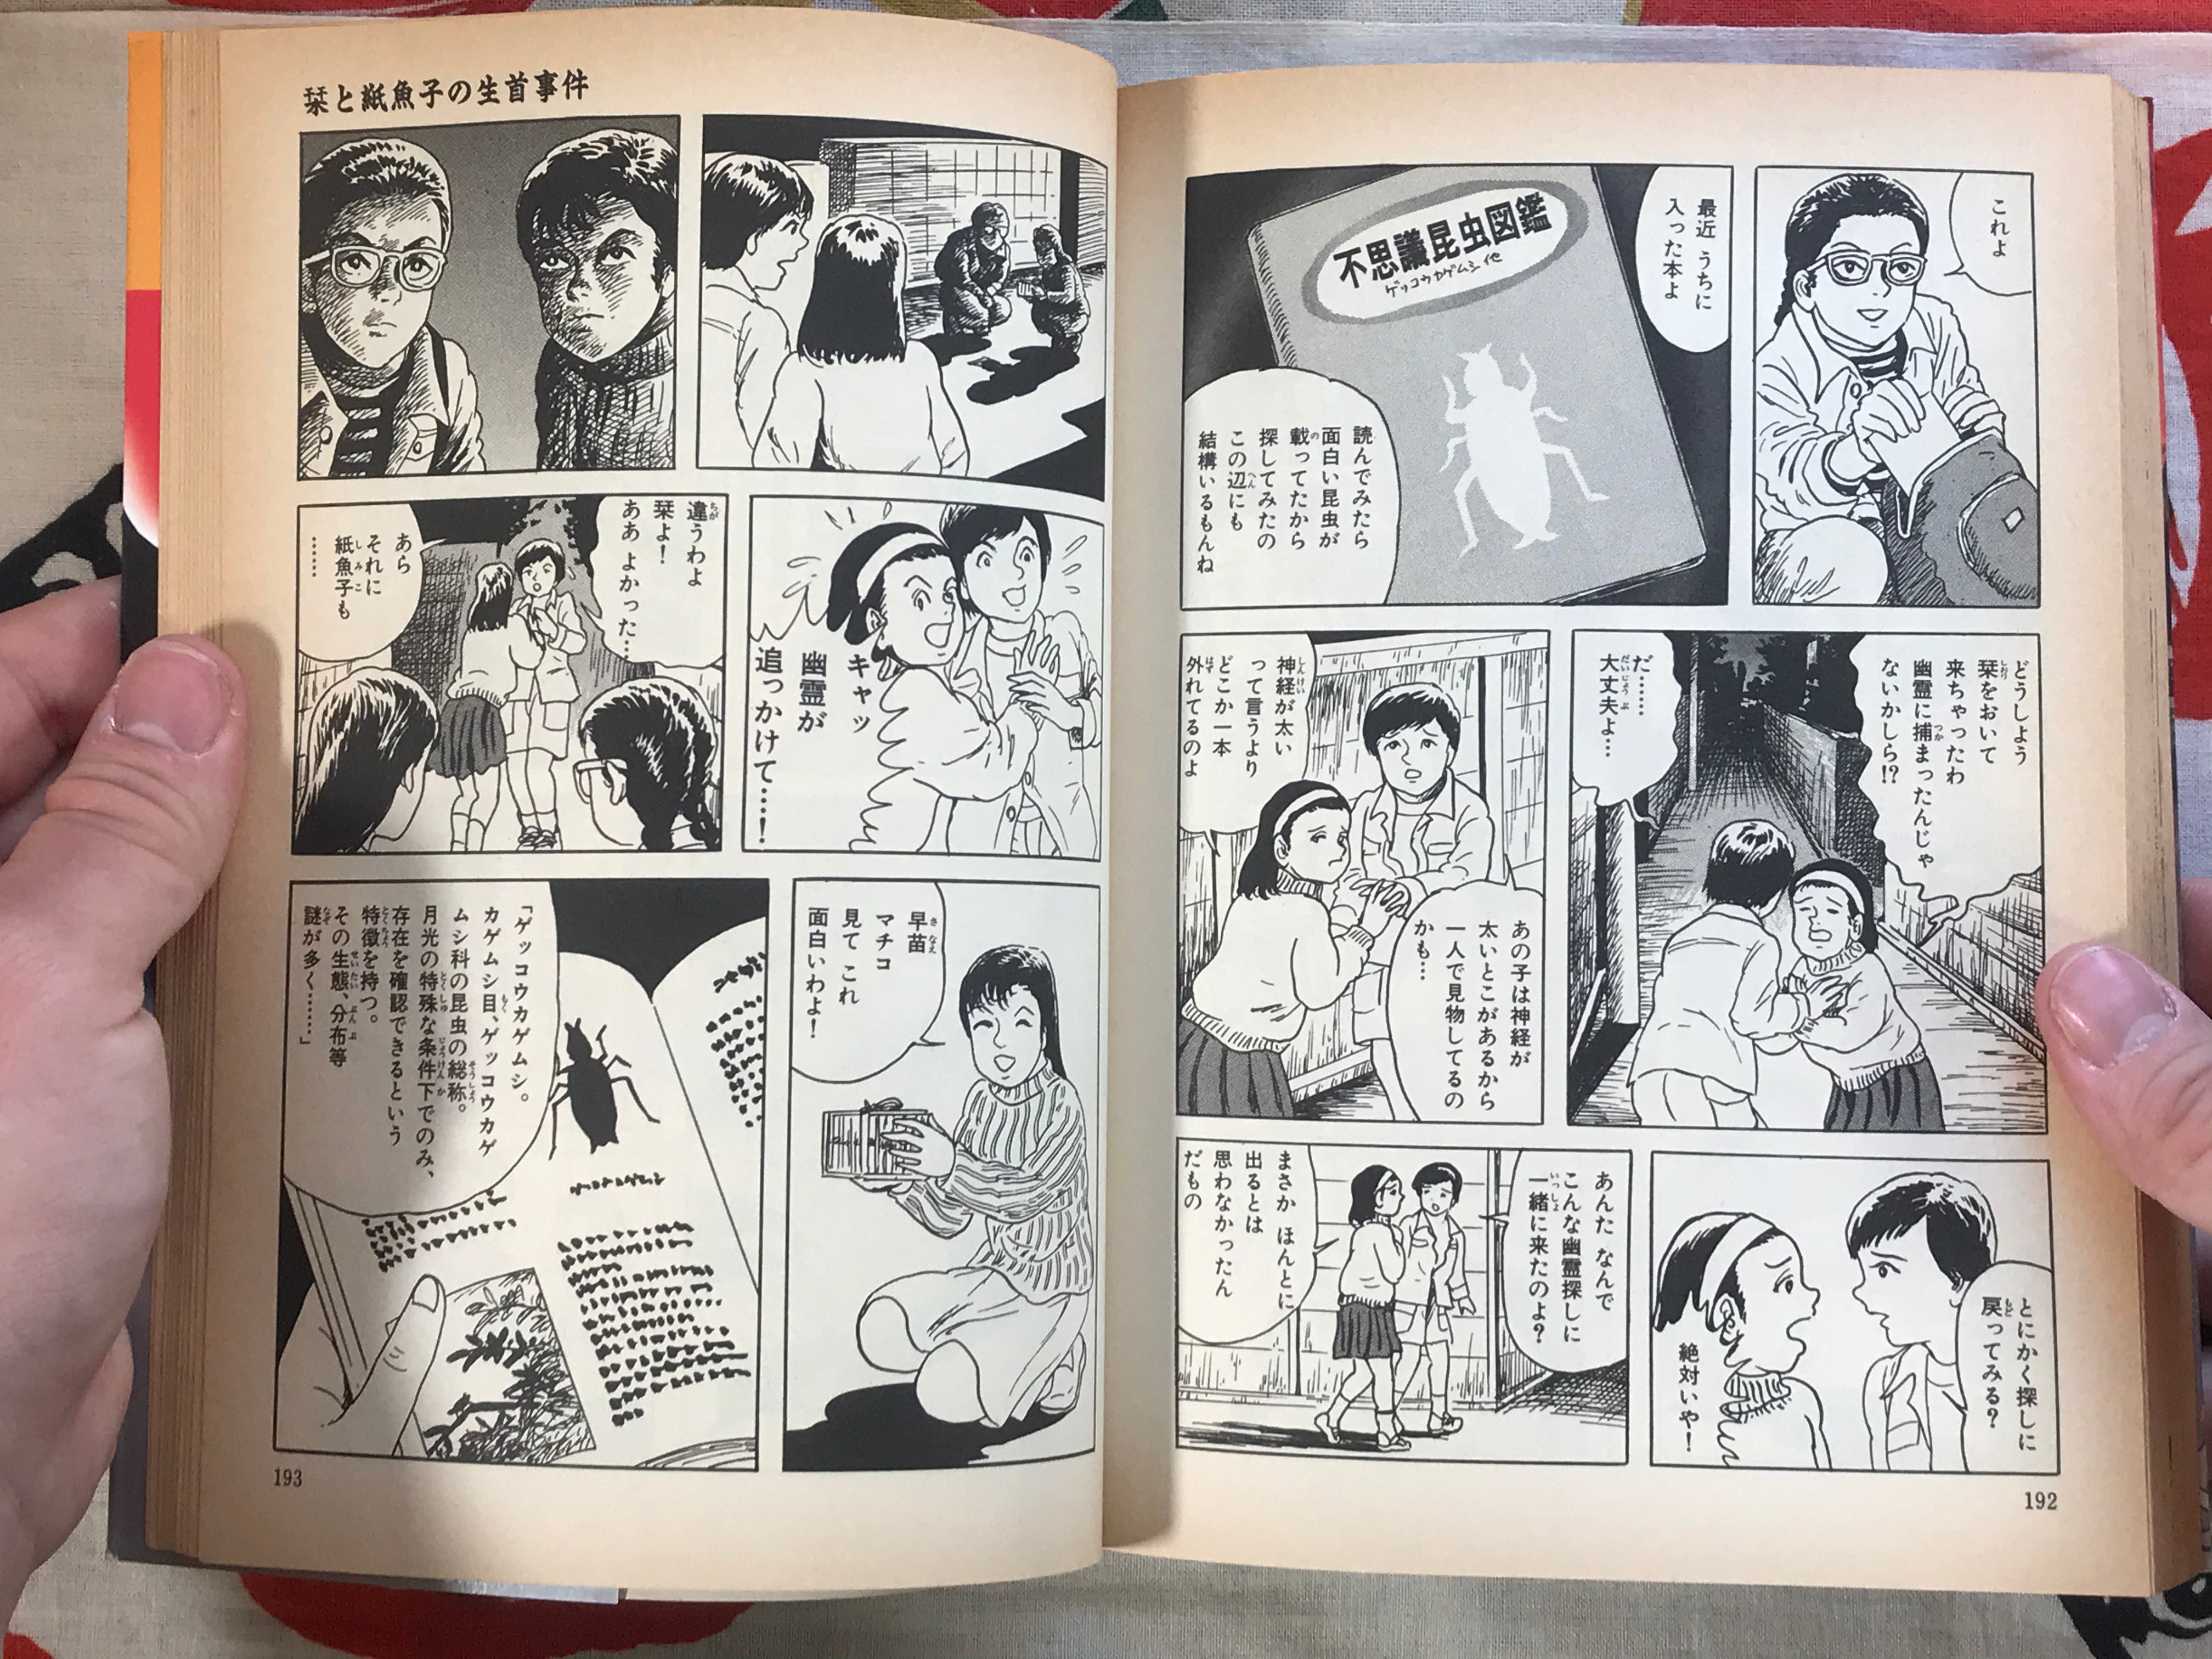 The Beheading Incident of Shiori and Kamiko by Daijiro Morohoshi (1997)